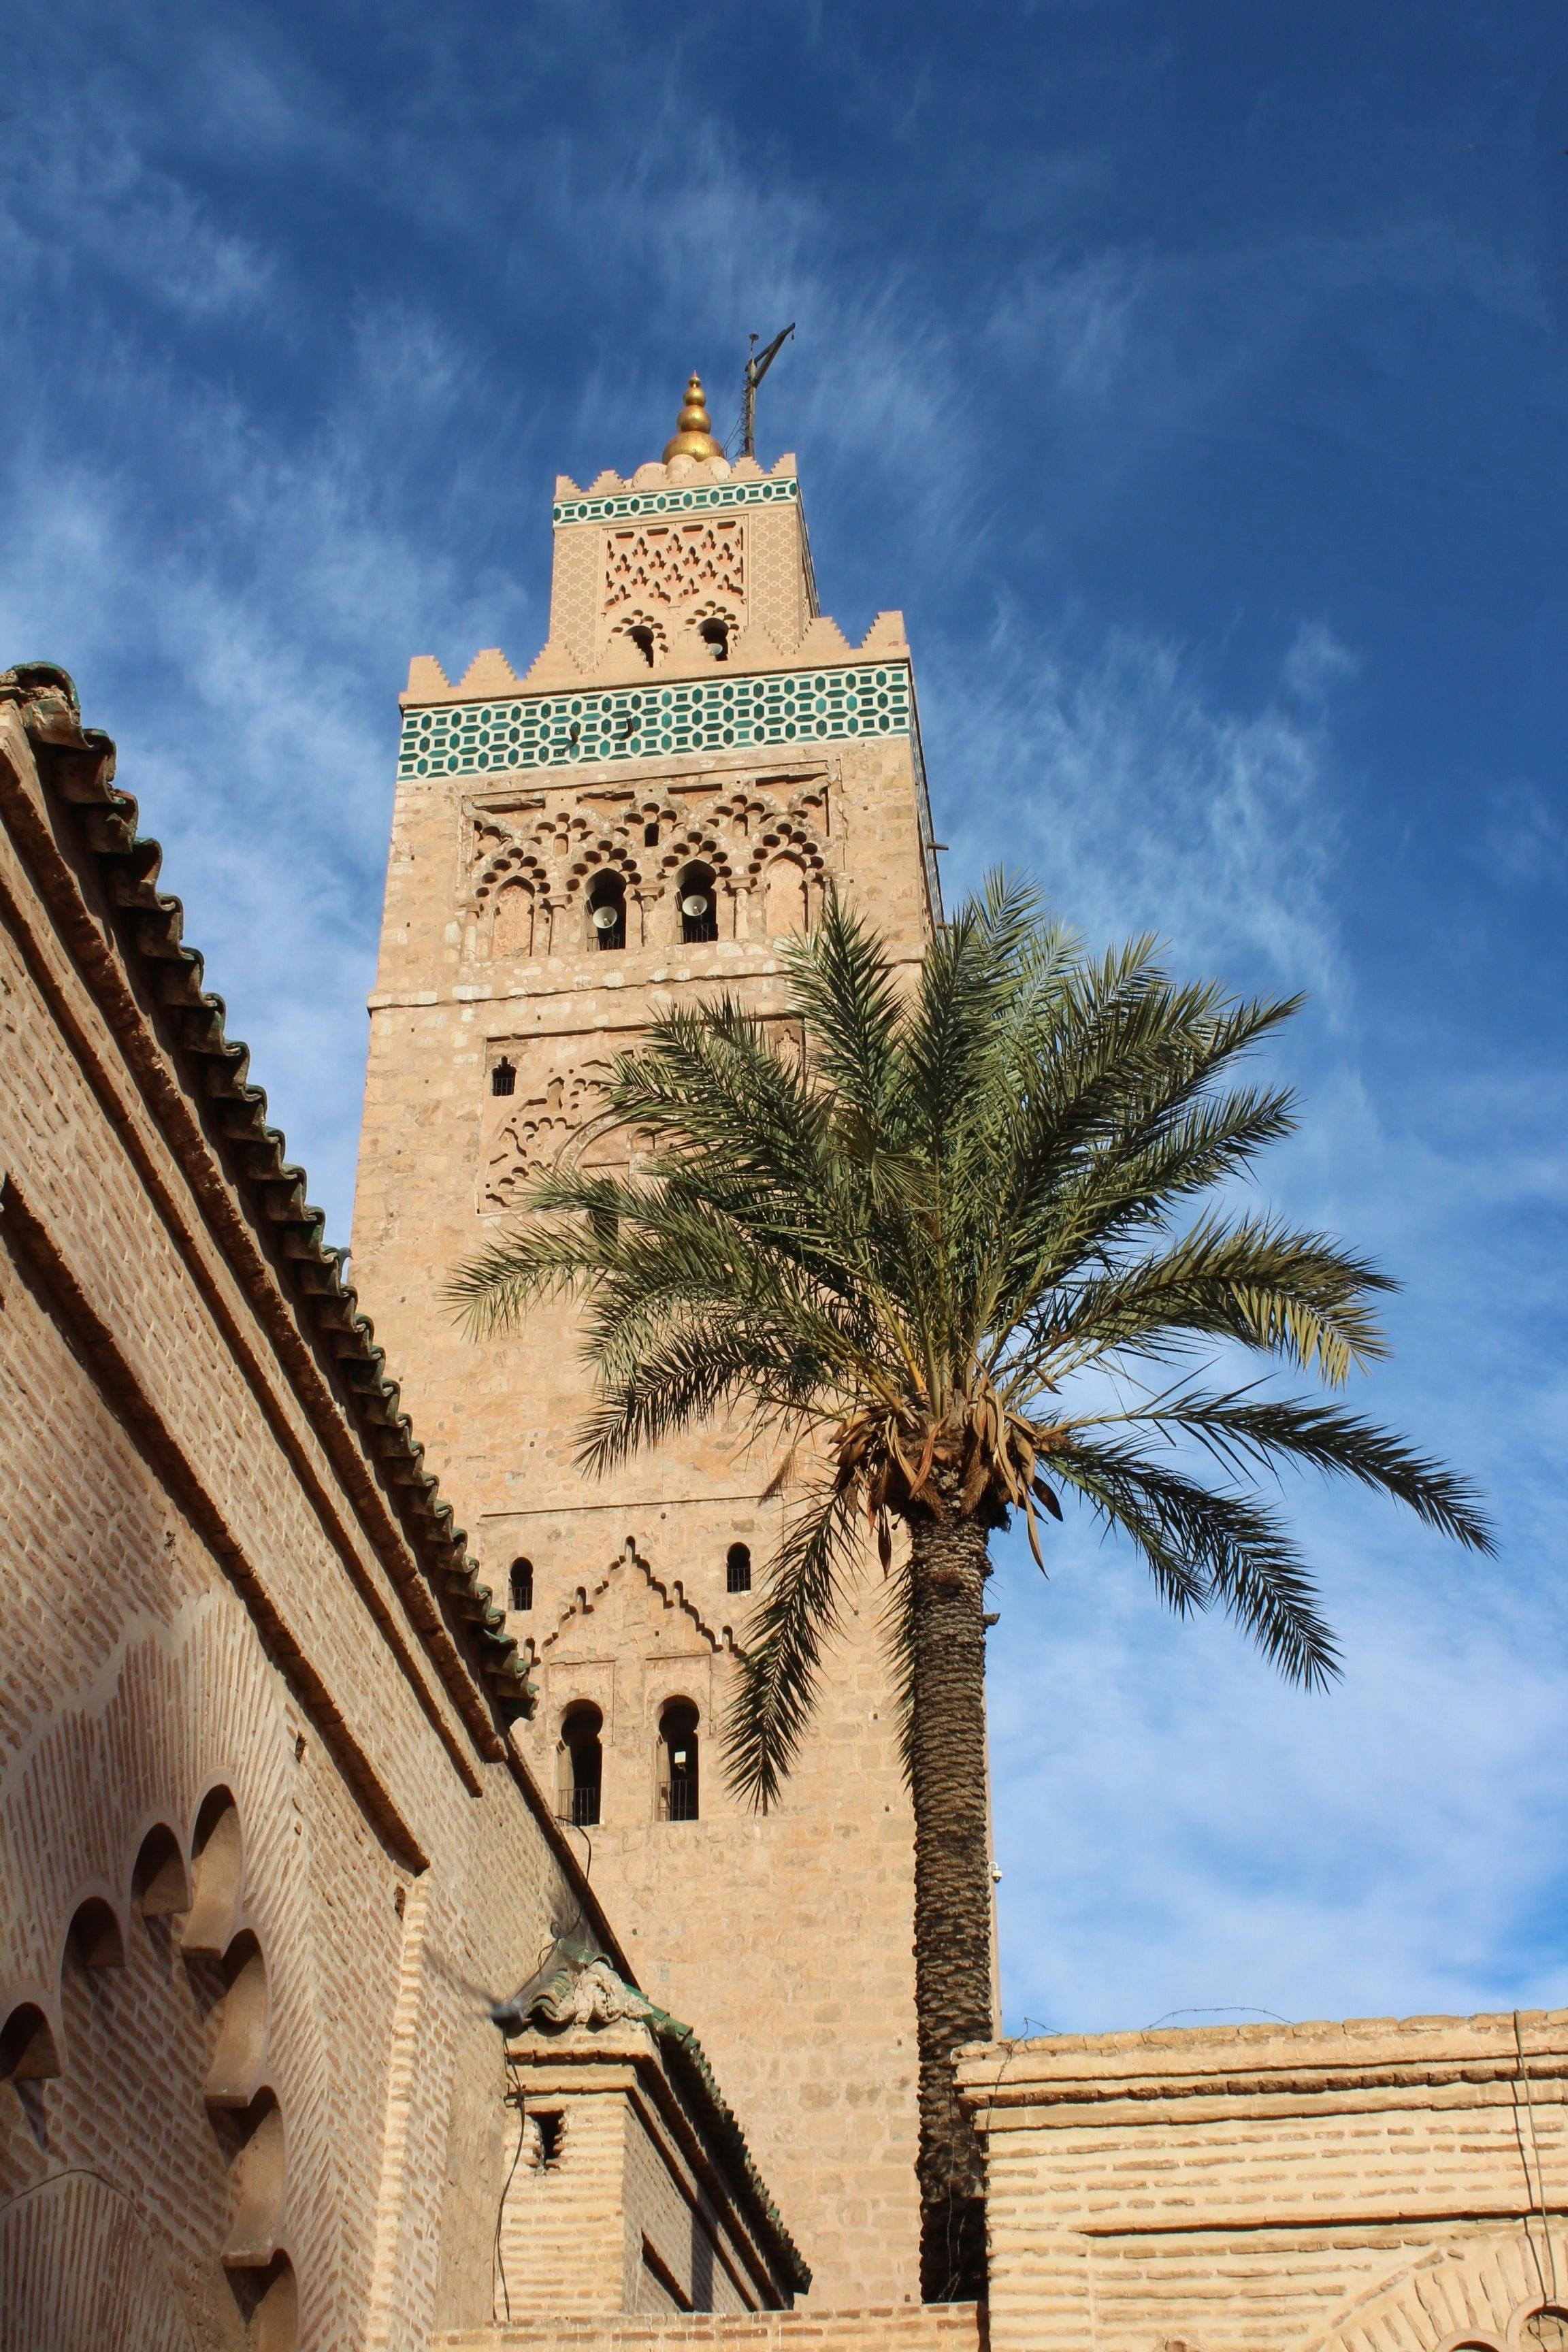 Marrakech in Morocco.